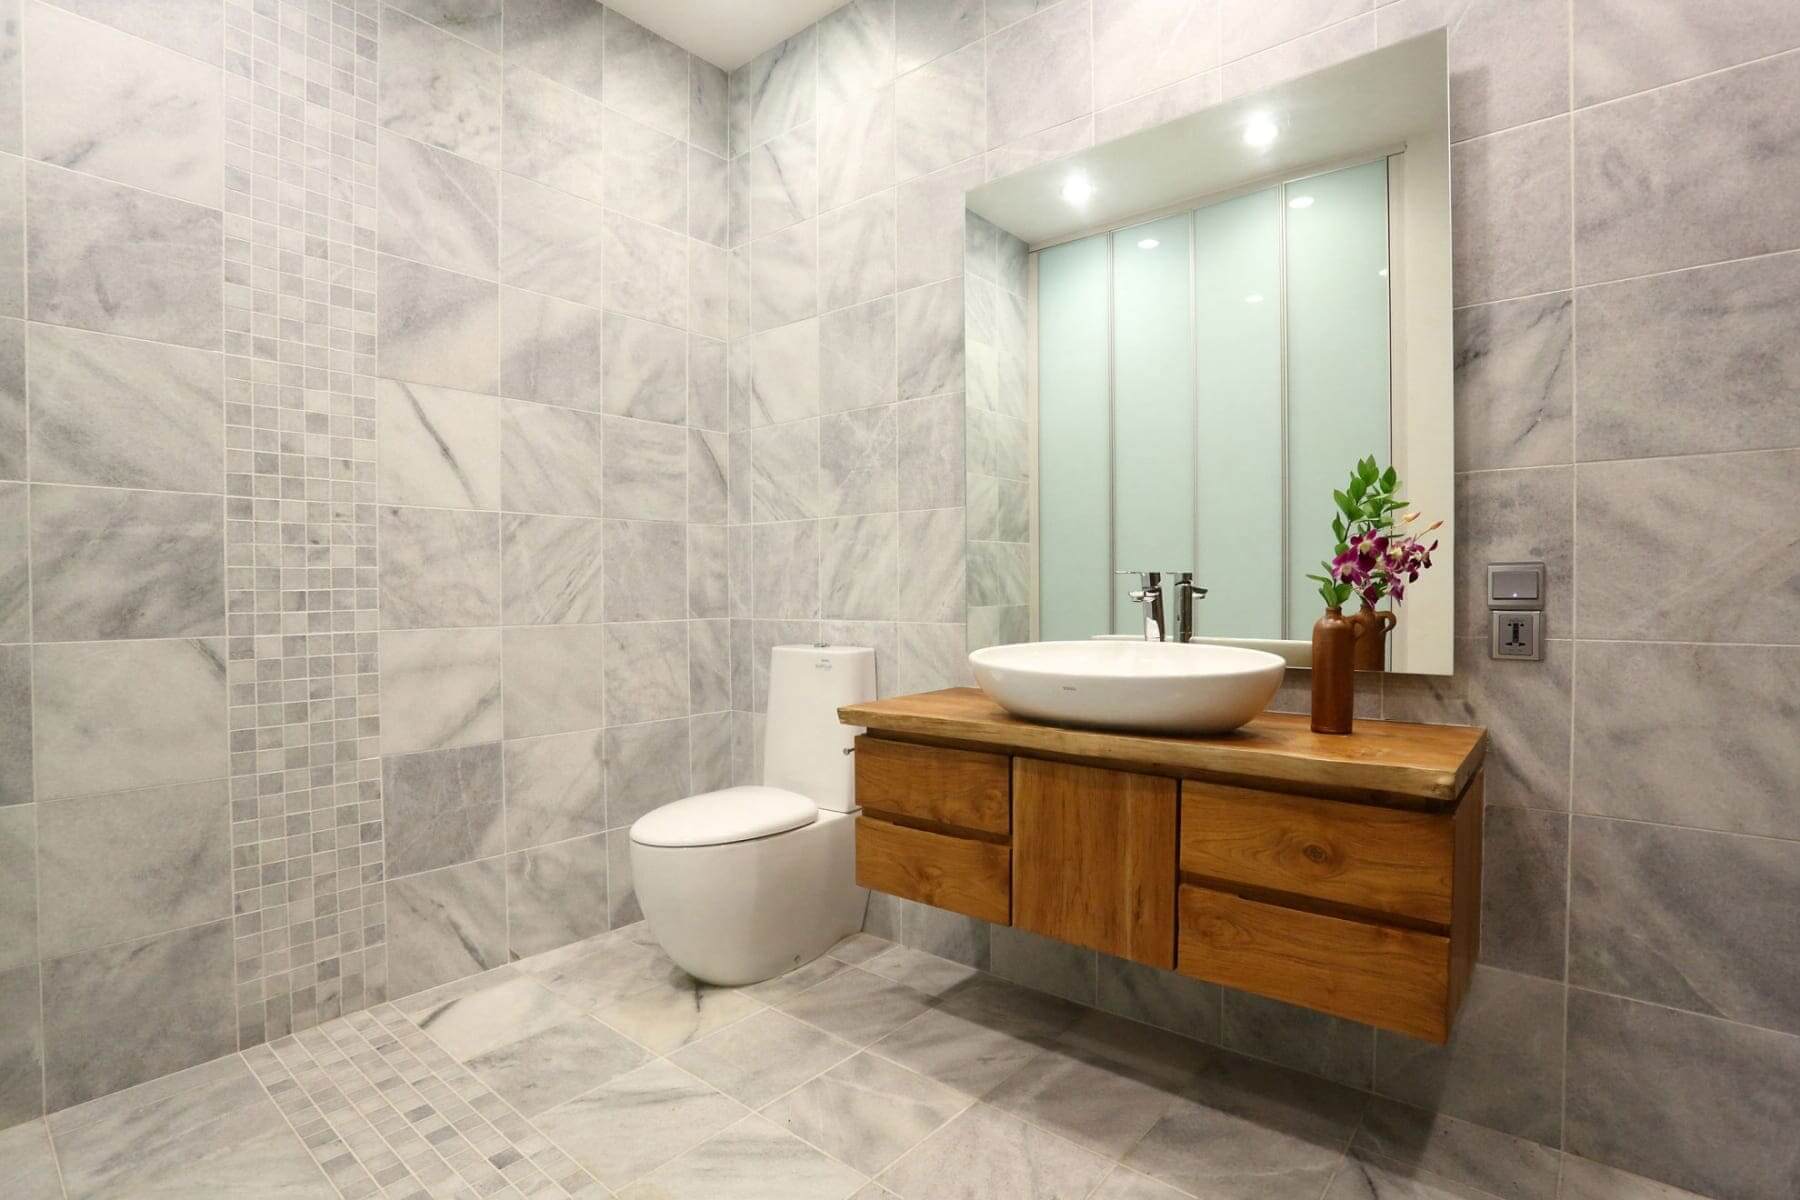 Marble stone tiled bathroom